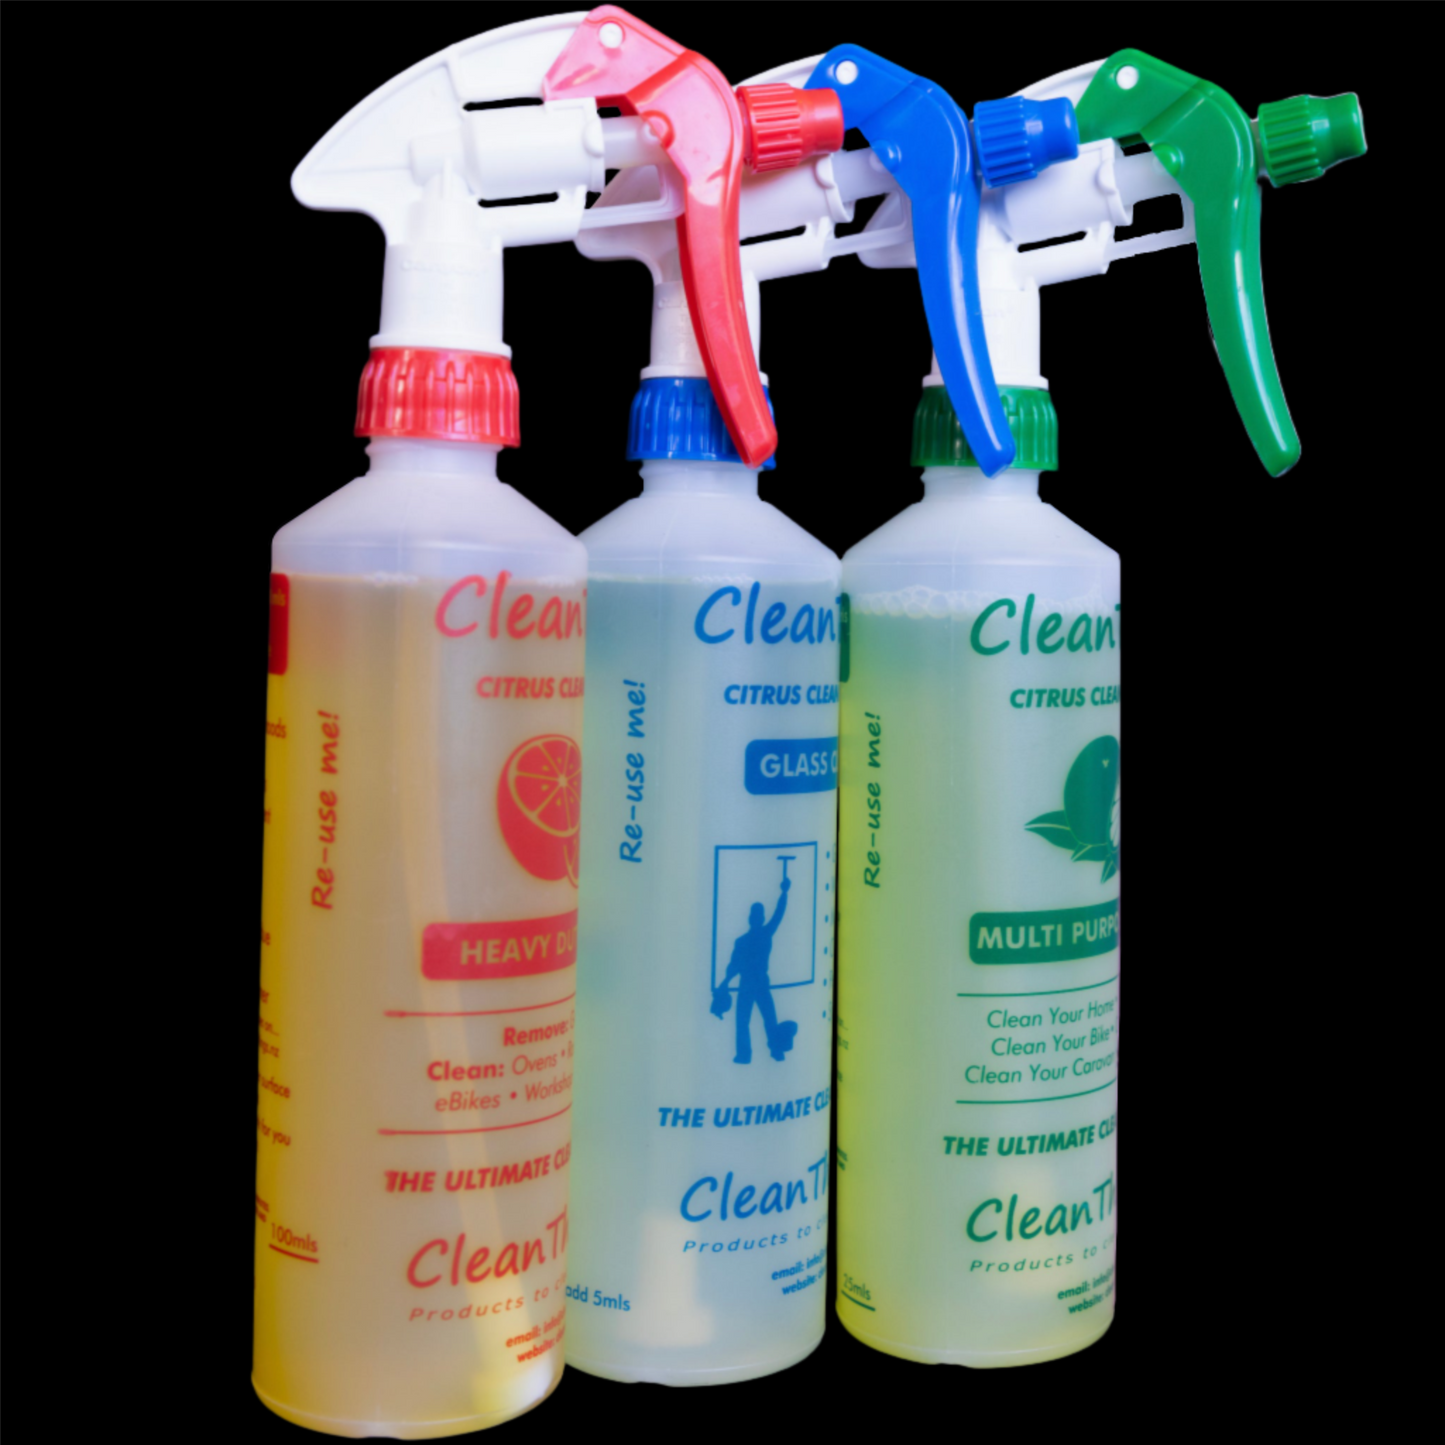 Citrus Cleaner Spray Bottles set of 3 Red Heavy Duty Cleaner & Blue Glass Cleaner & Green Multi Purpose Cleaner refill reuse